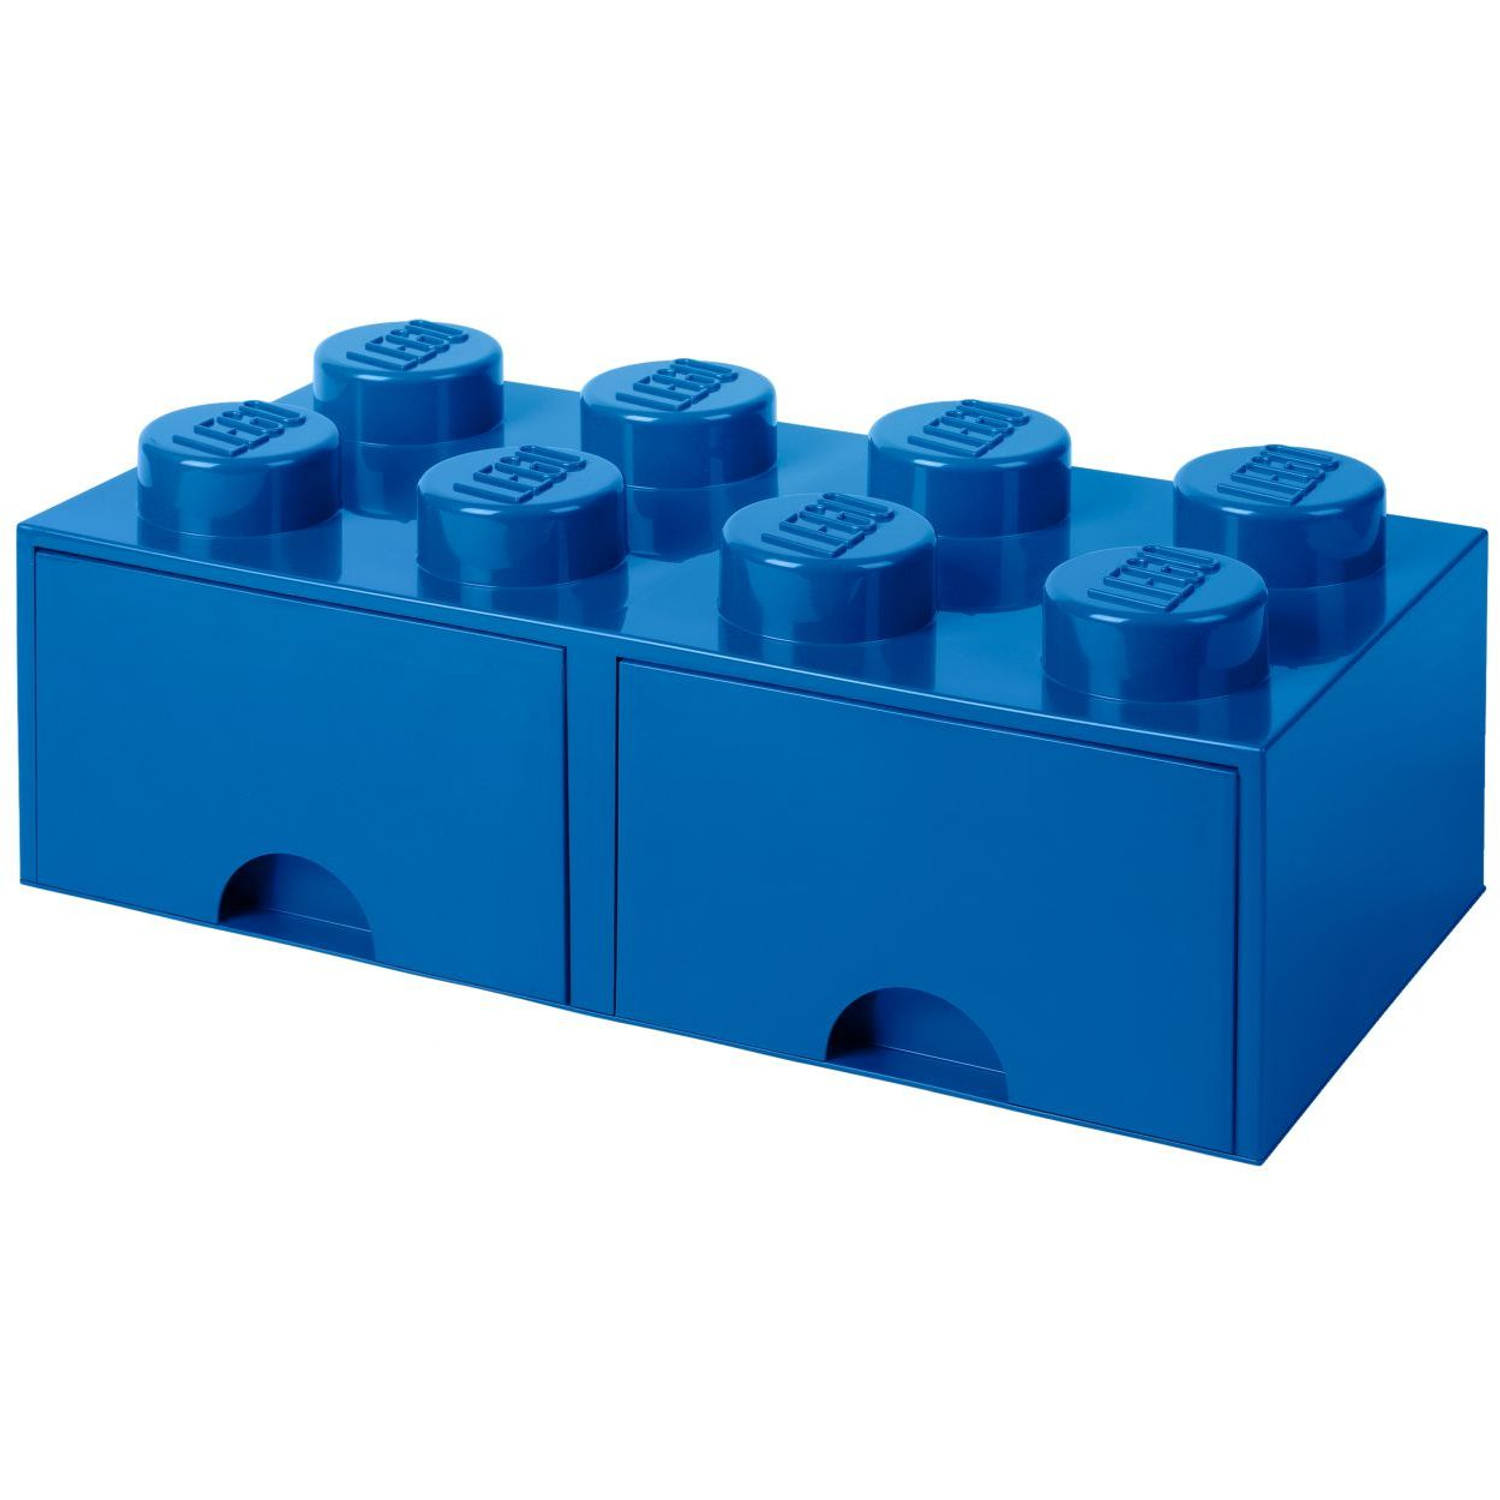 LEGO Storage 8 Knob Brick 2 Drawers (Bright Blue)